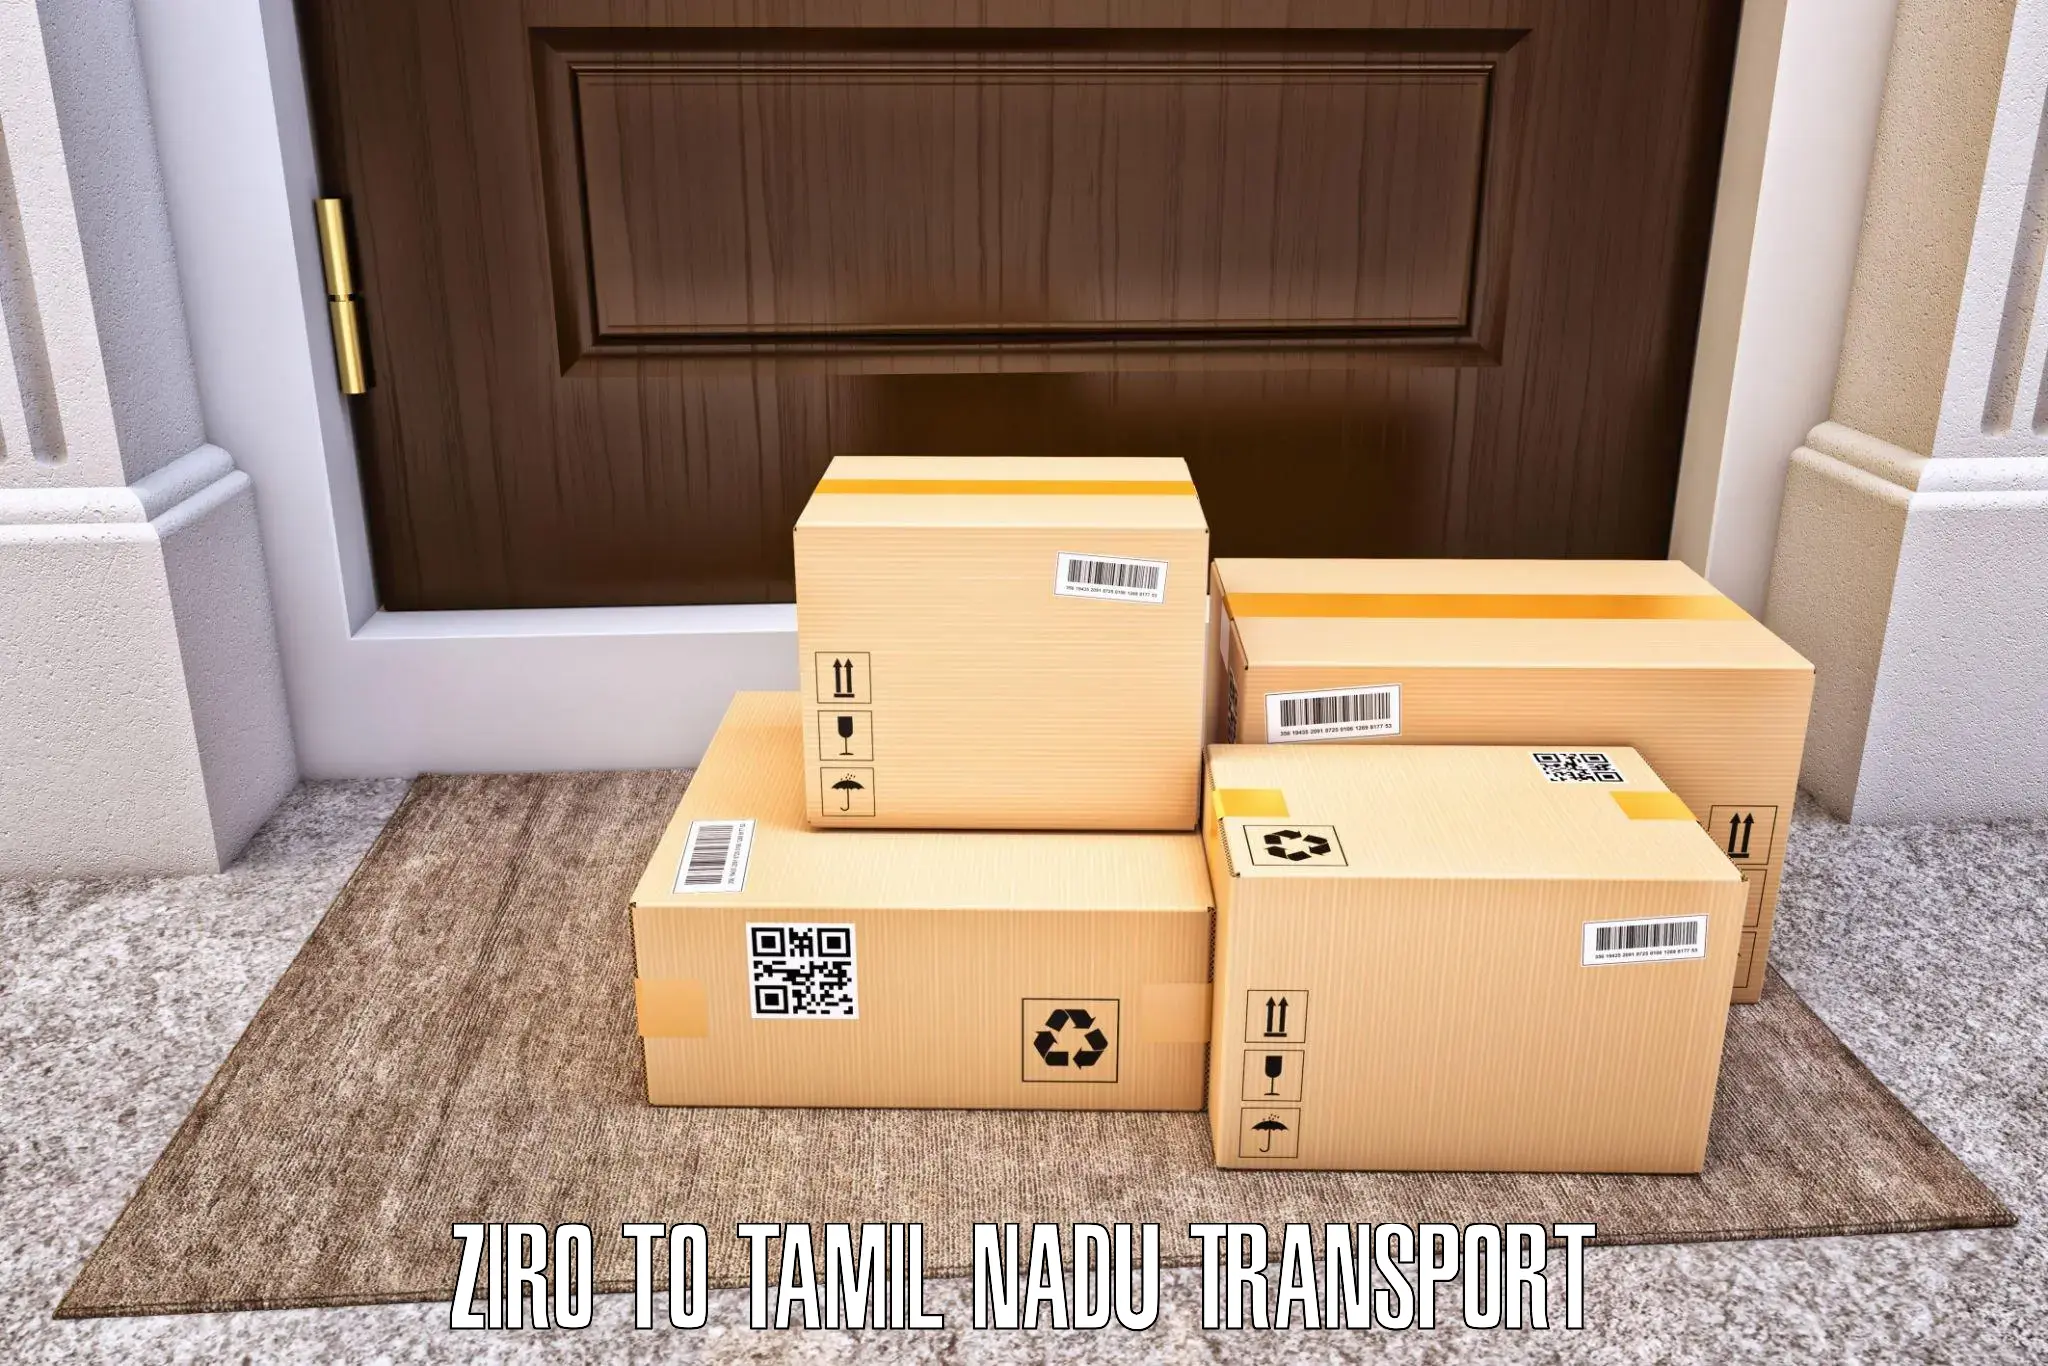 Shipping partner Ziro to Cuddalore